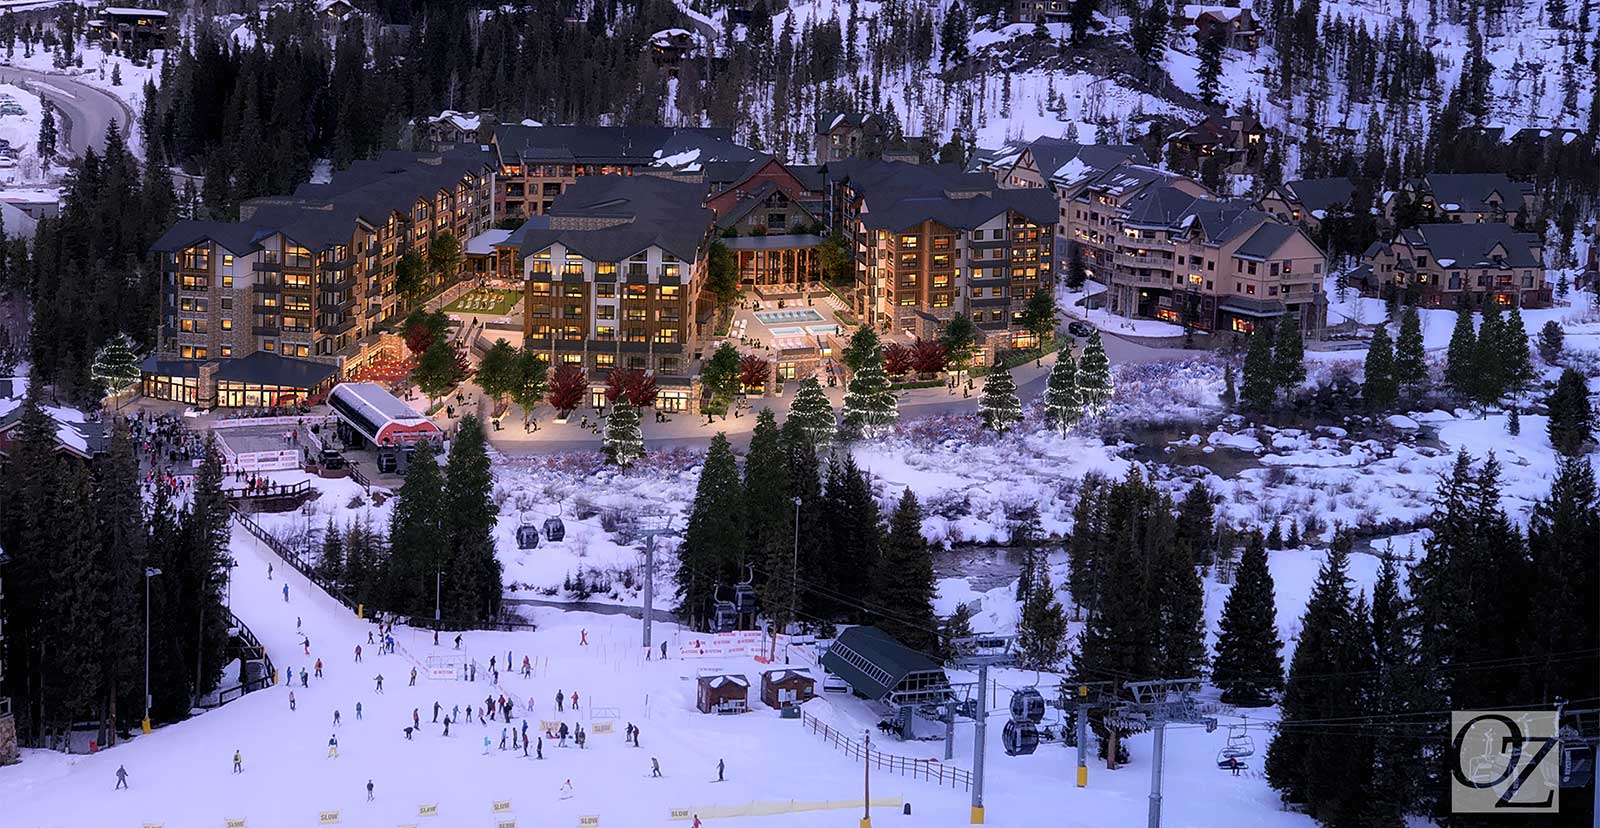 Keystone Base Project Builds on Colorado Resort's Identity